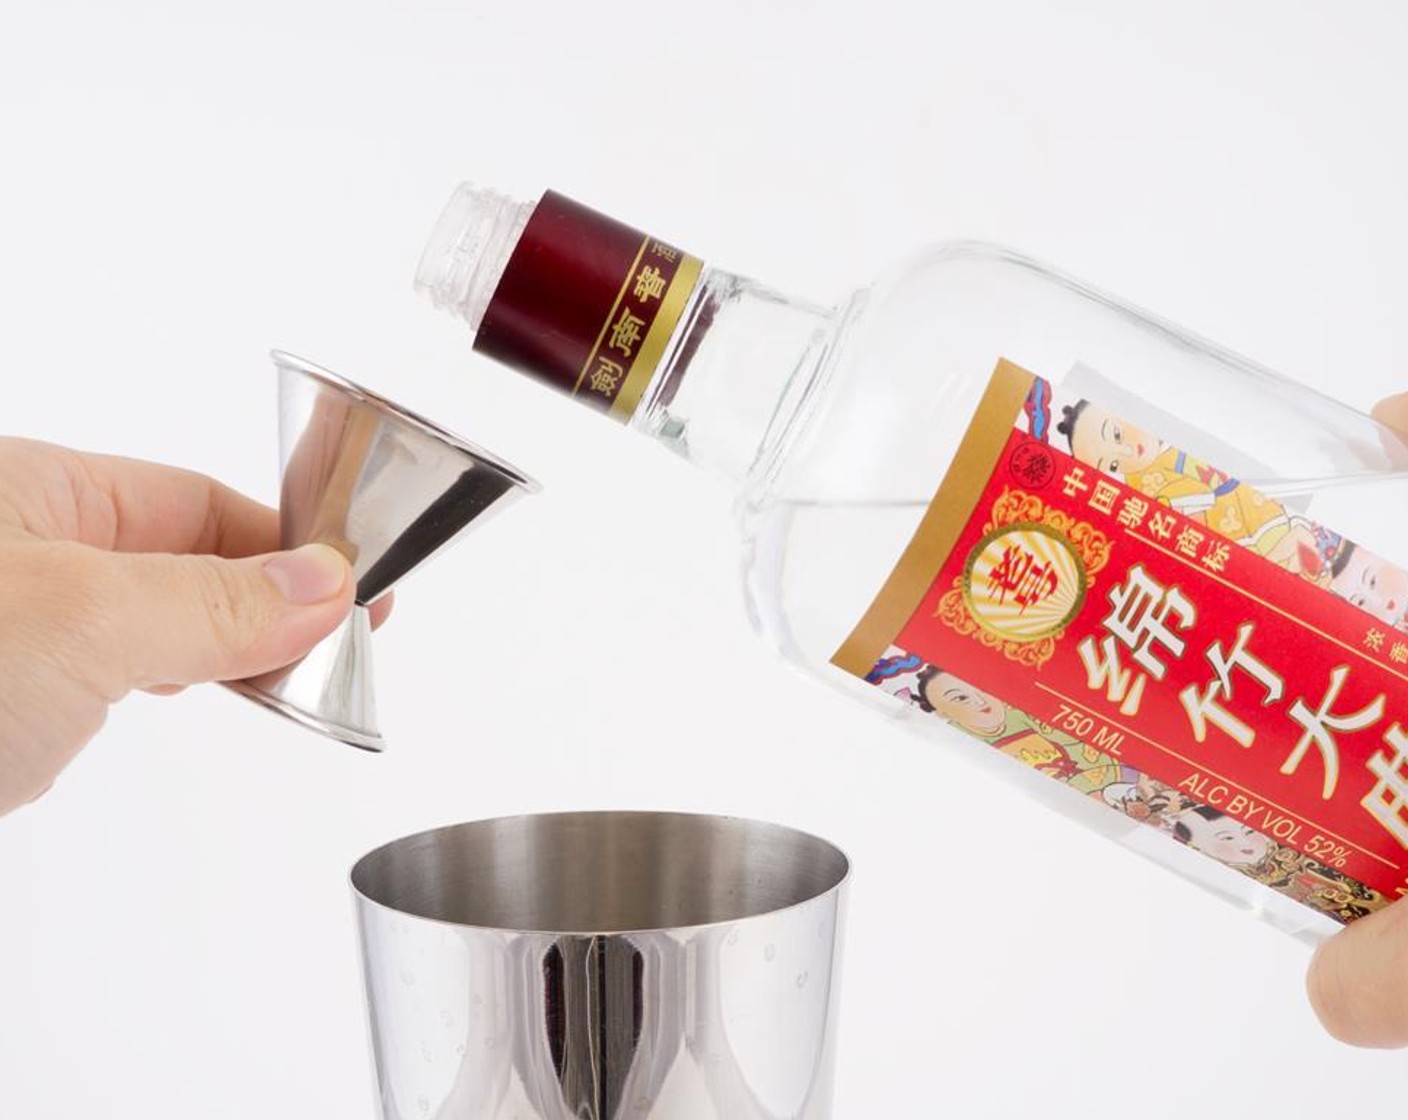 step 1 Pour Mianzhu Daqu Laohao (1.3 fl oz) into a cocktail shaker with ice cubes.